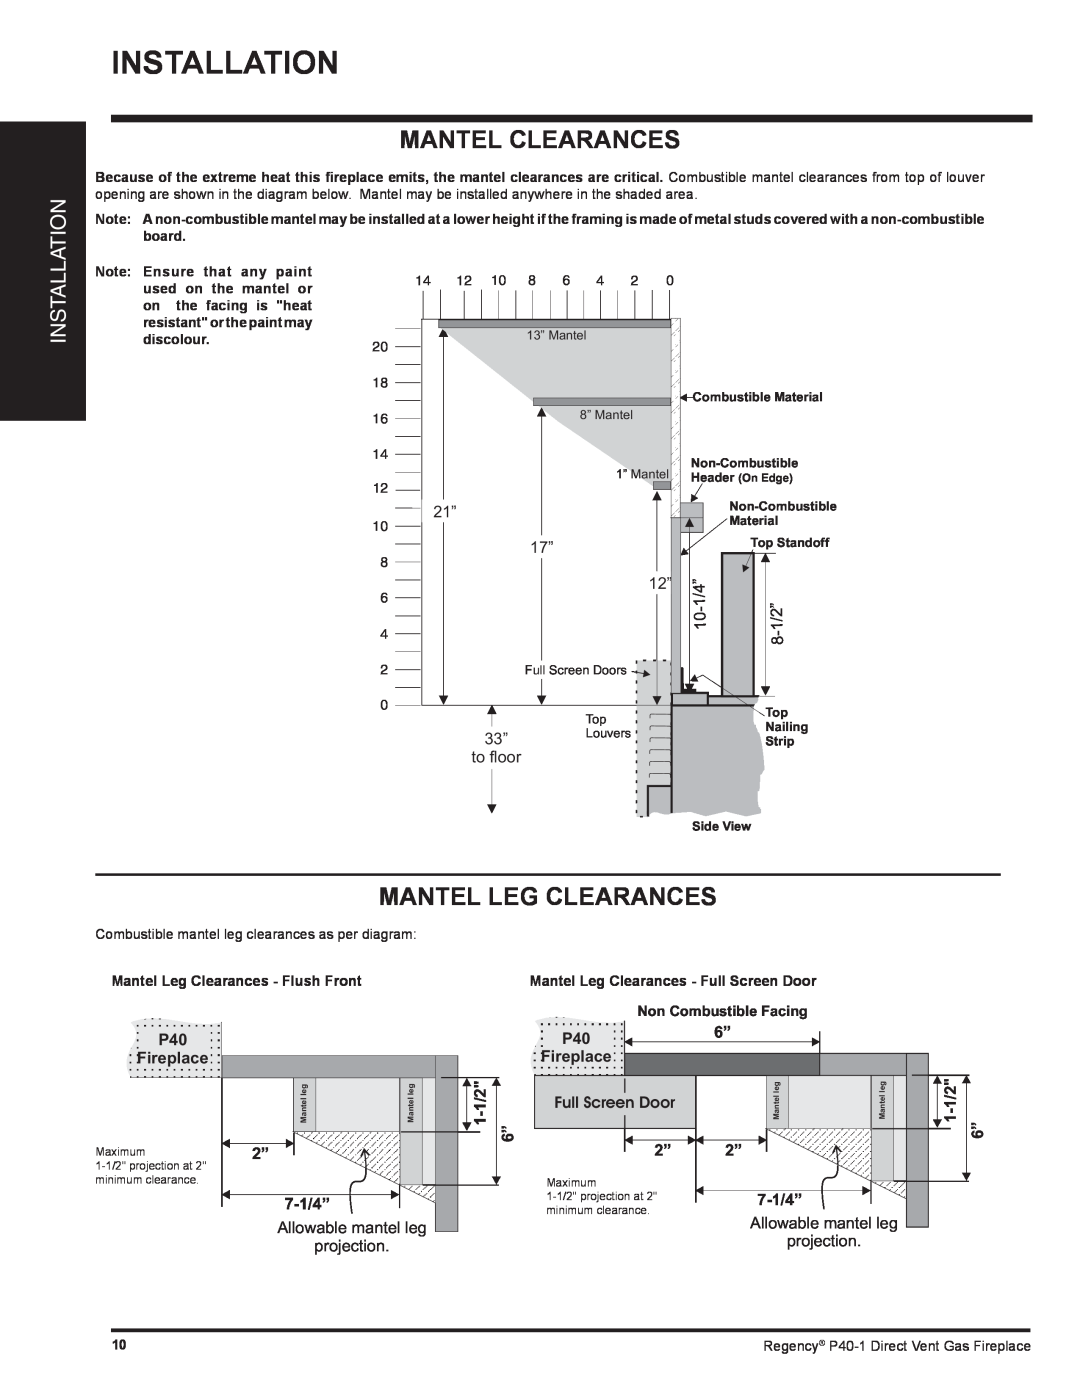 Regency P40-NG1, P40-LP1 installation manual Mantel Clearances, Mantel Leg Clearances, P40 Fireplace, 7-1/4”, 1-1/2 